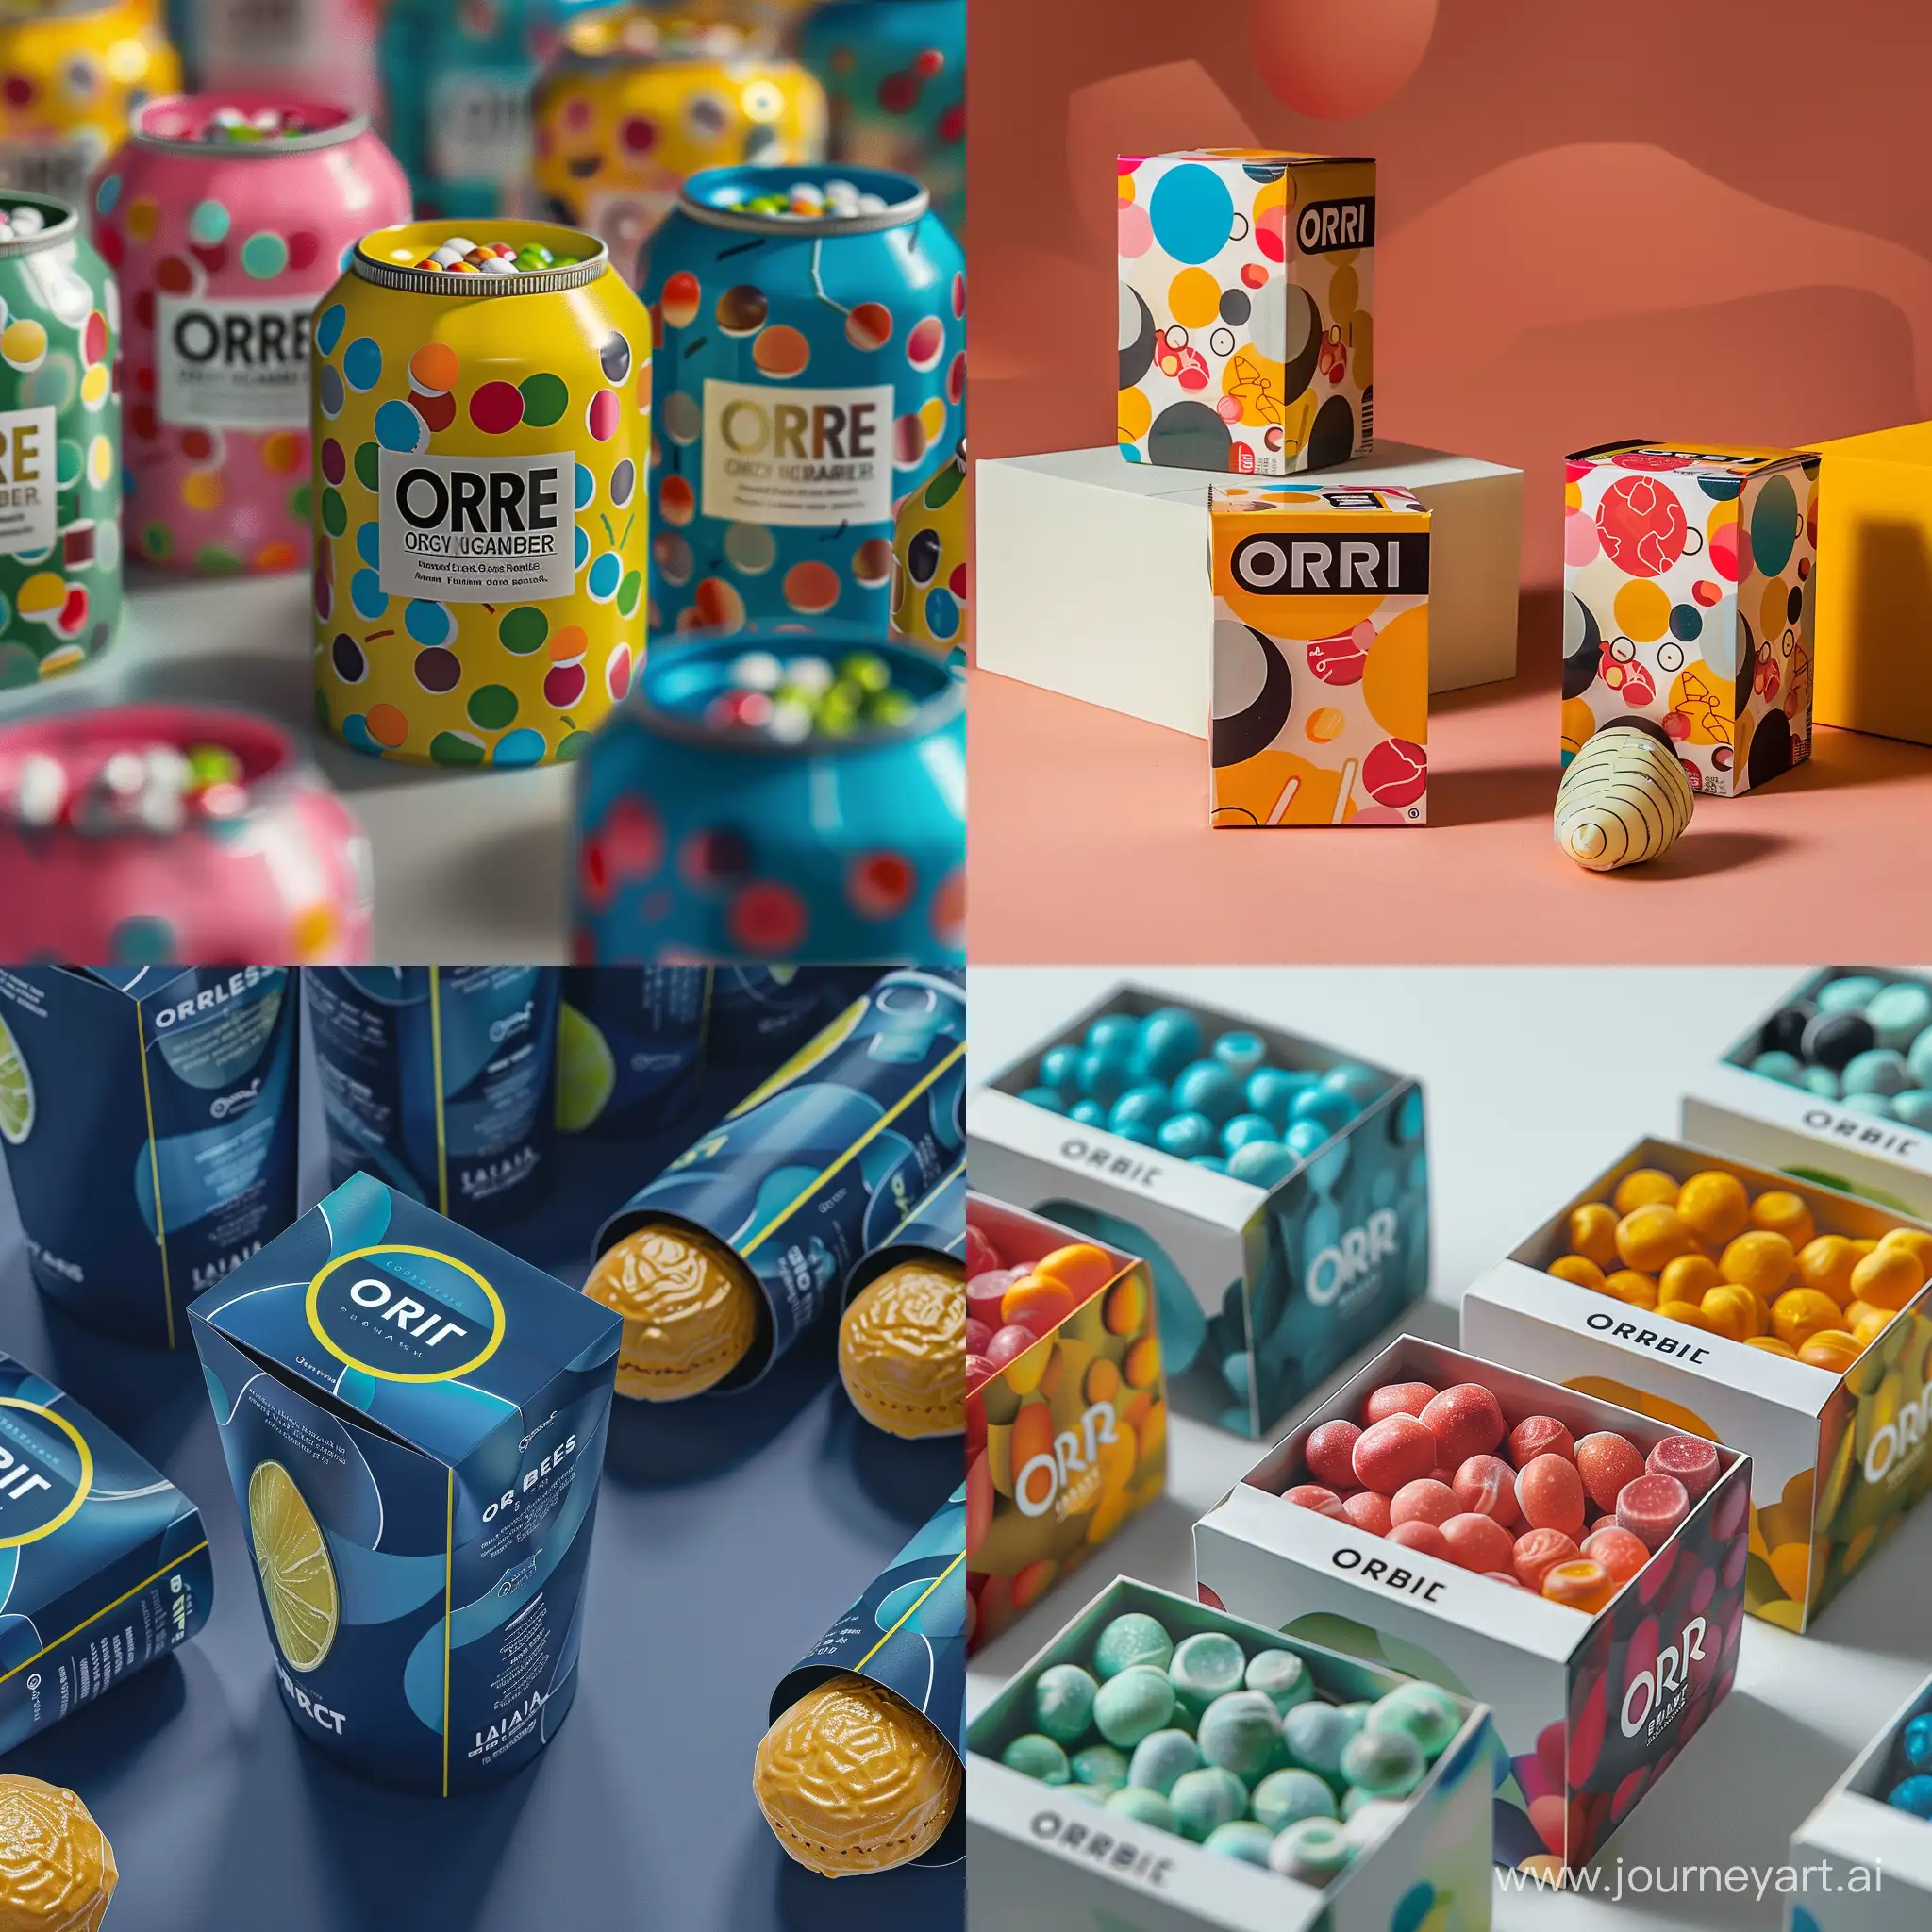 Colorful-Orbit-Gum-Packaging-Design-on-Vibrant-Background